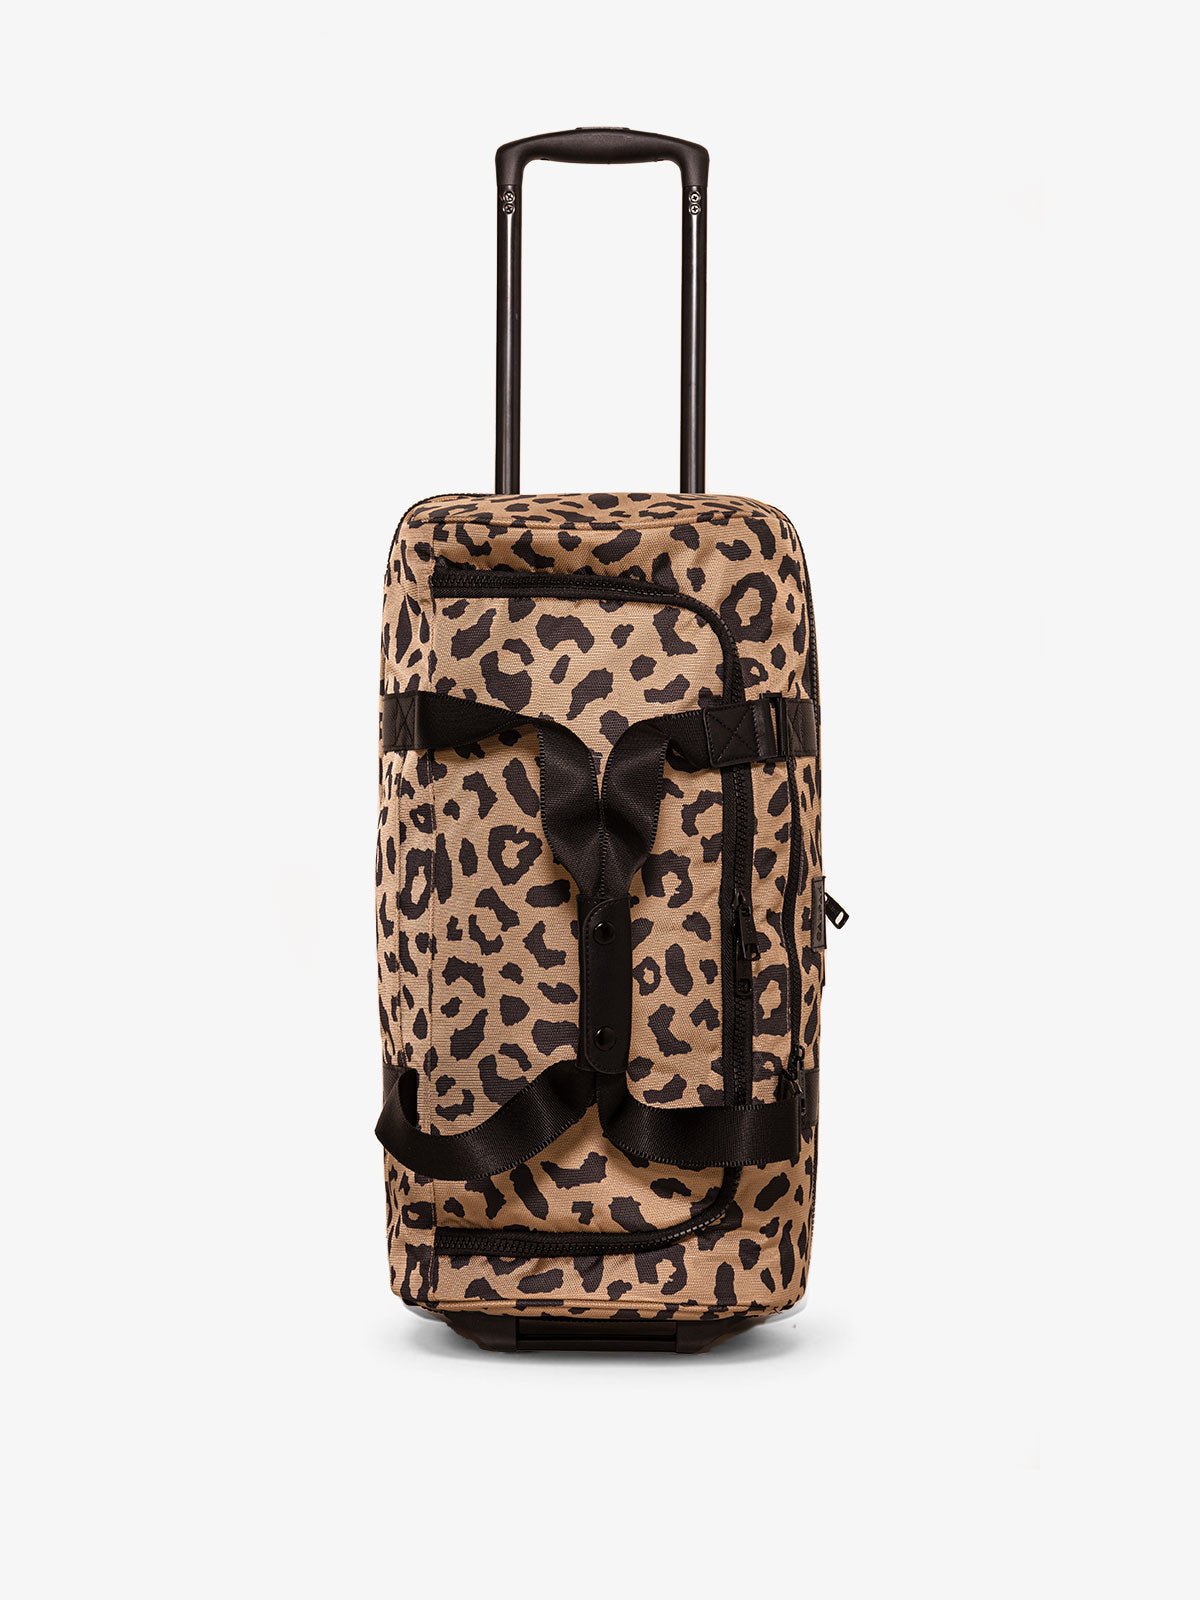 CALPAK Stevyn Rolling Duffel 22-inch bag in cheetah